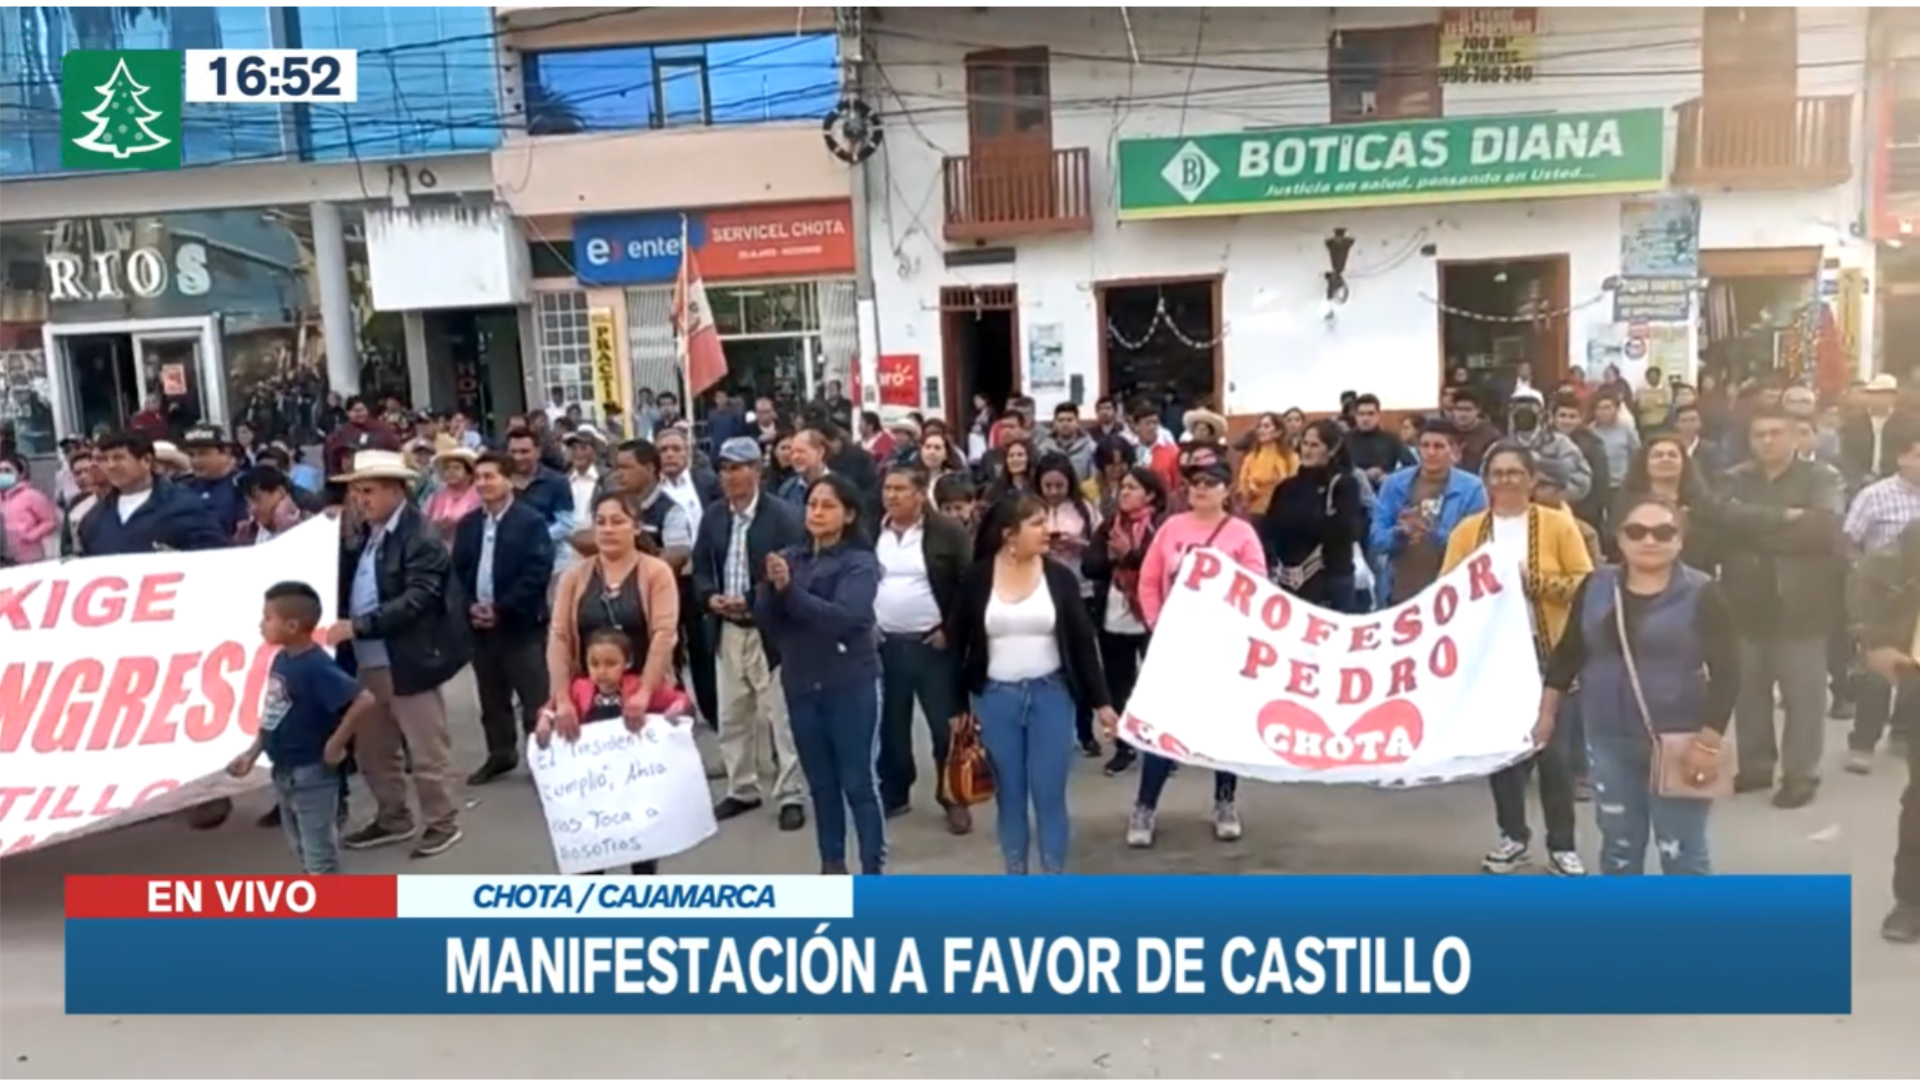 Manifestantes protestan a favor de Pedro Castillo.
Foto: Canal N